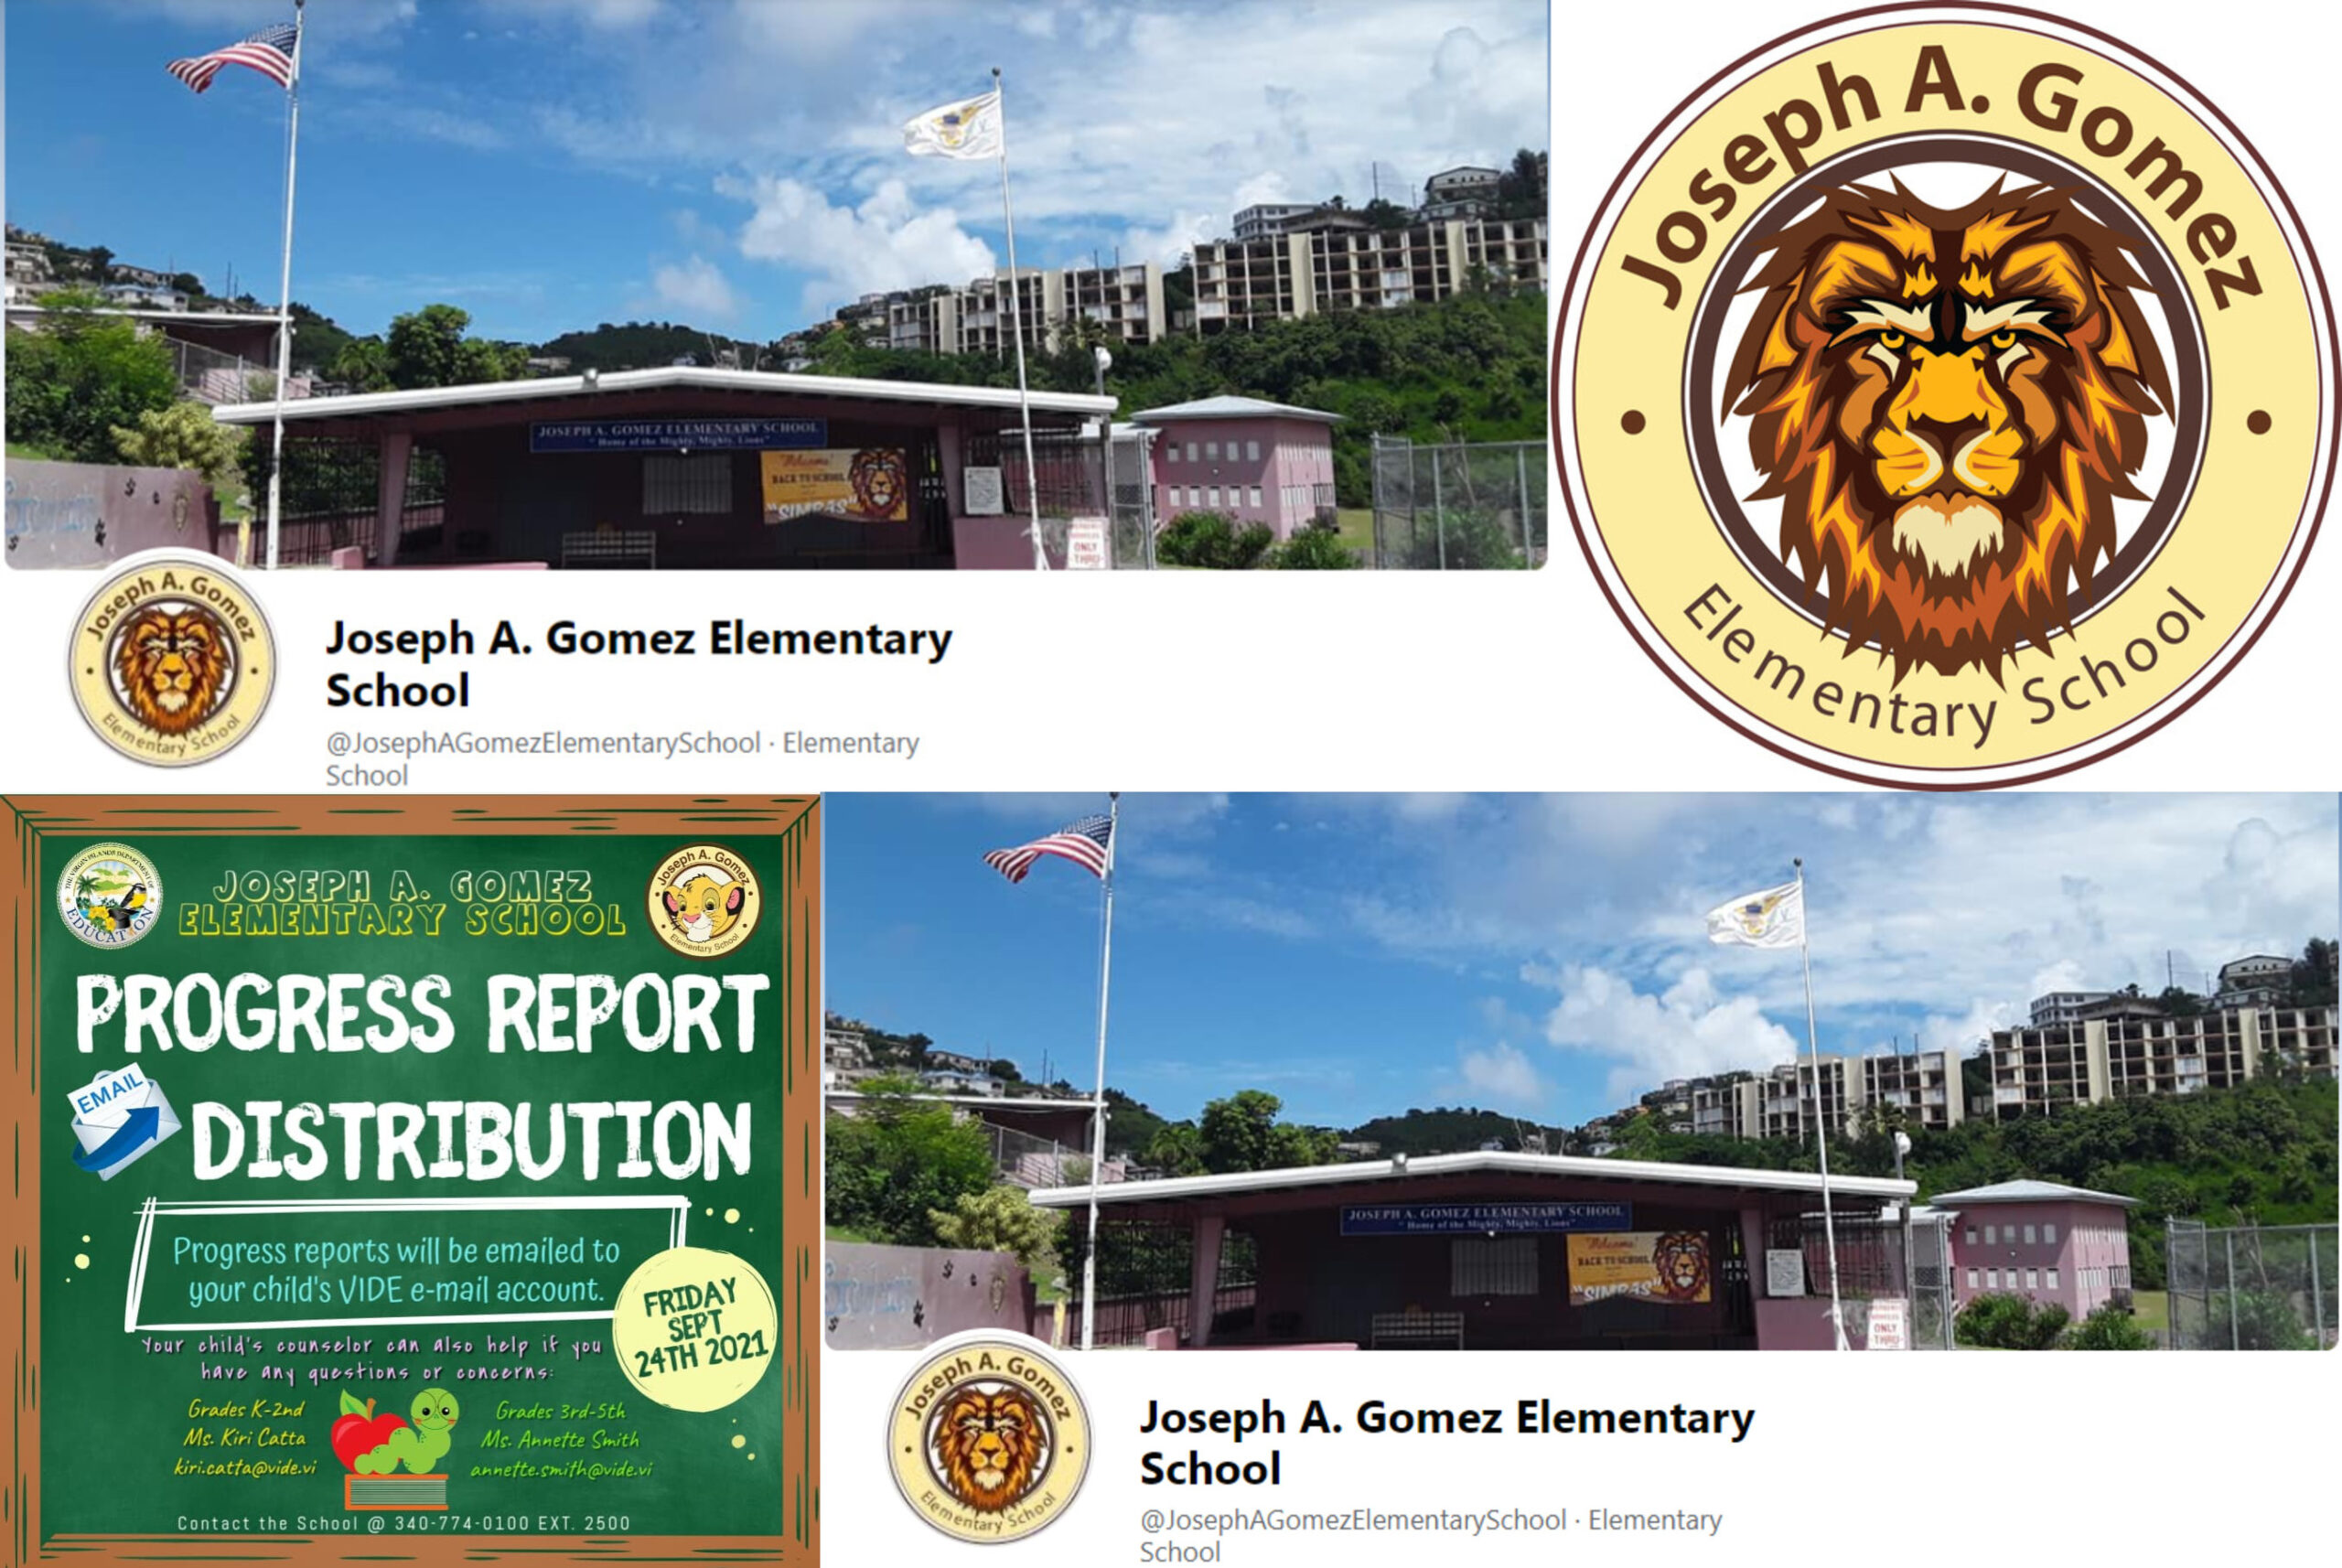 DOE: Joseph Gomez Elementary School Kindergarten Students For Early Dismissal